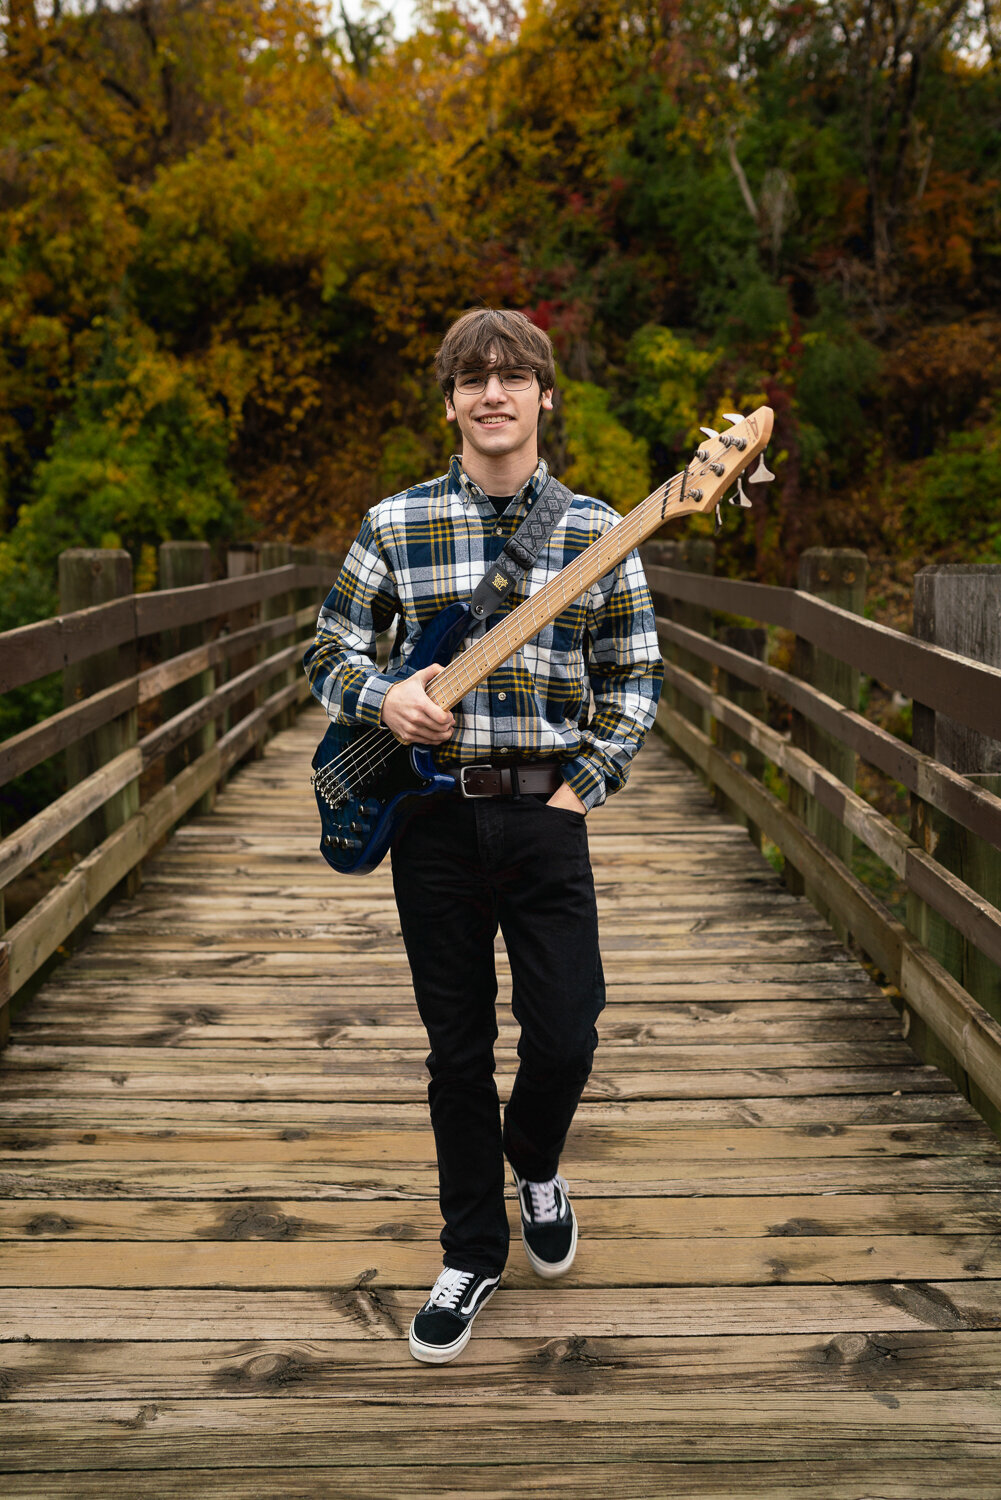 Senior boy carries bass guitar across bridge in the fall.